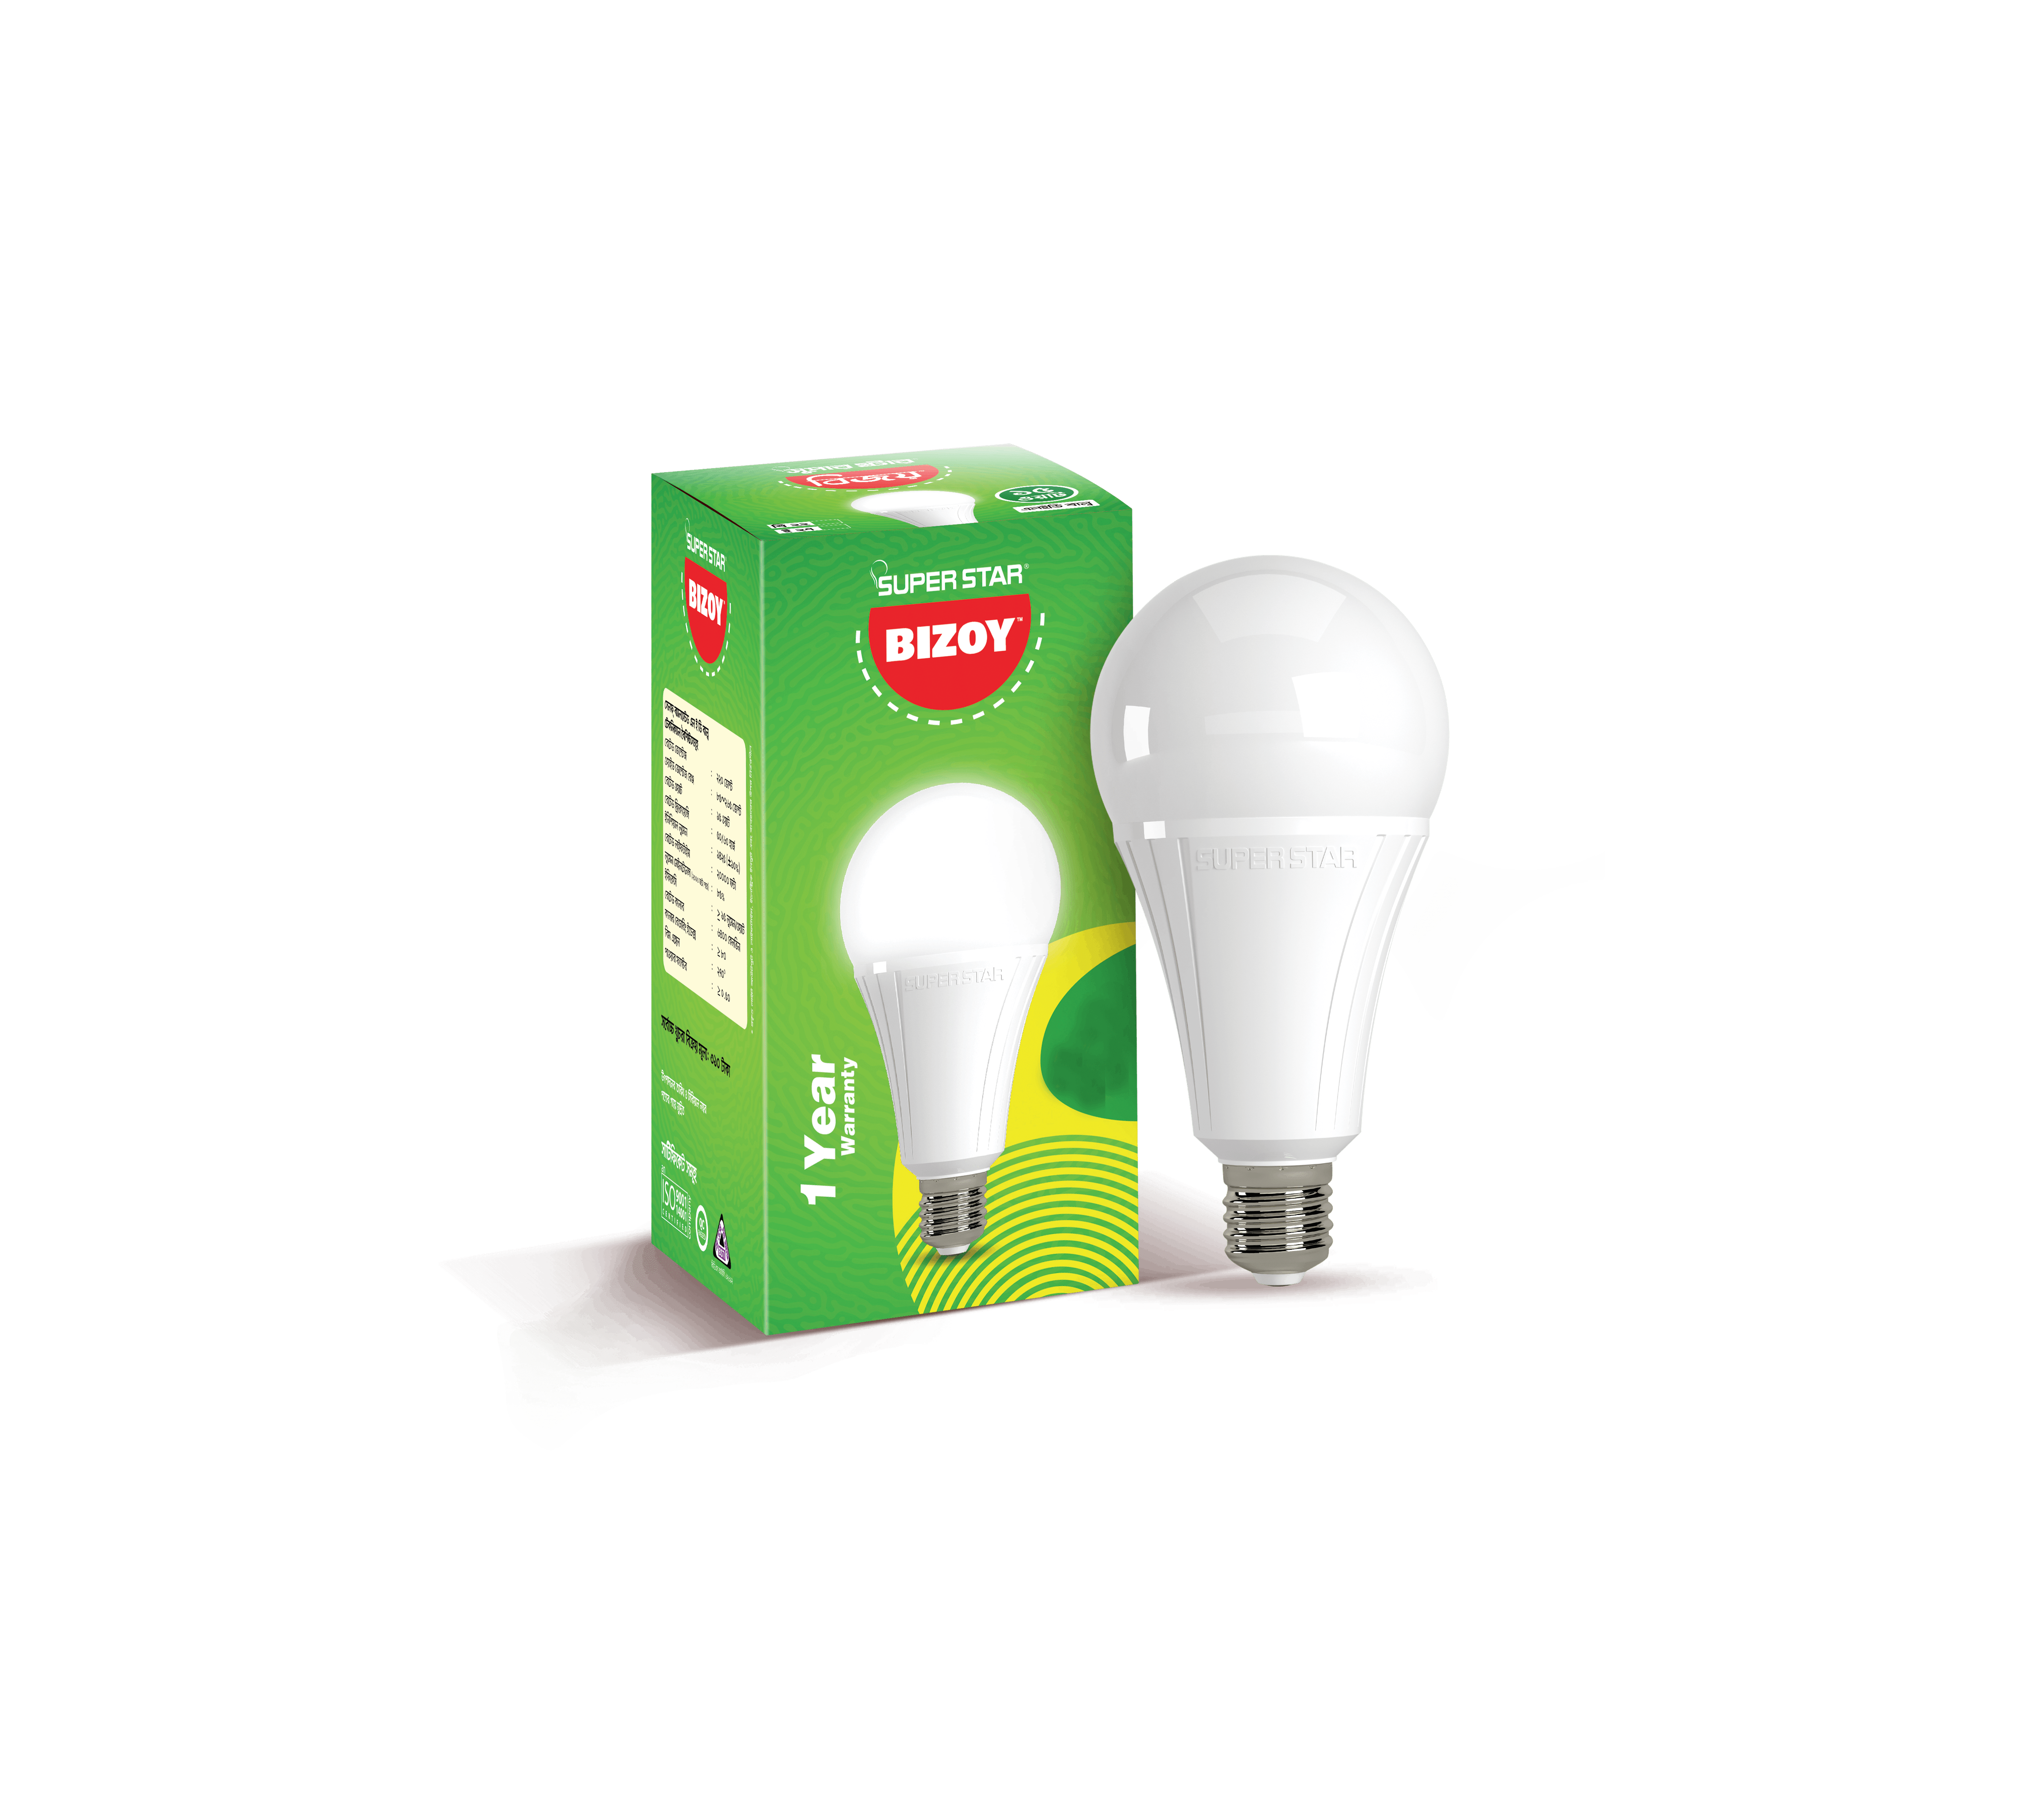 Super Star Bizoy AC LED Daylight Bulb